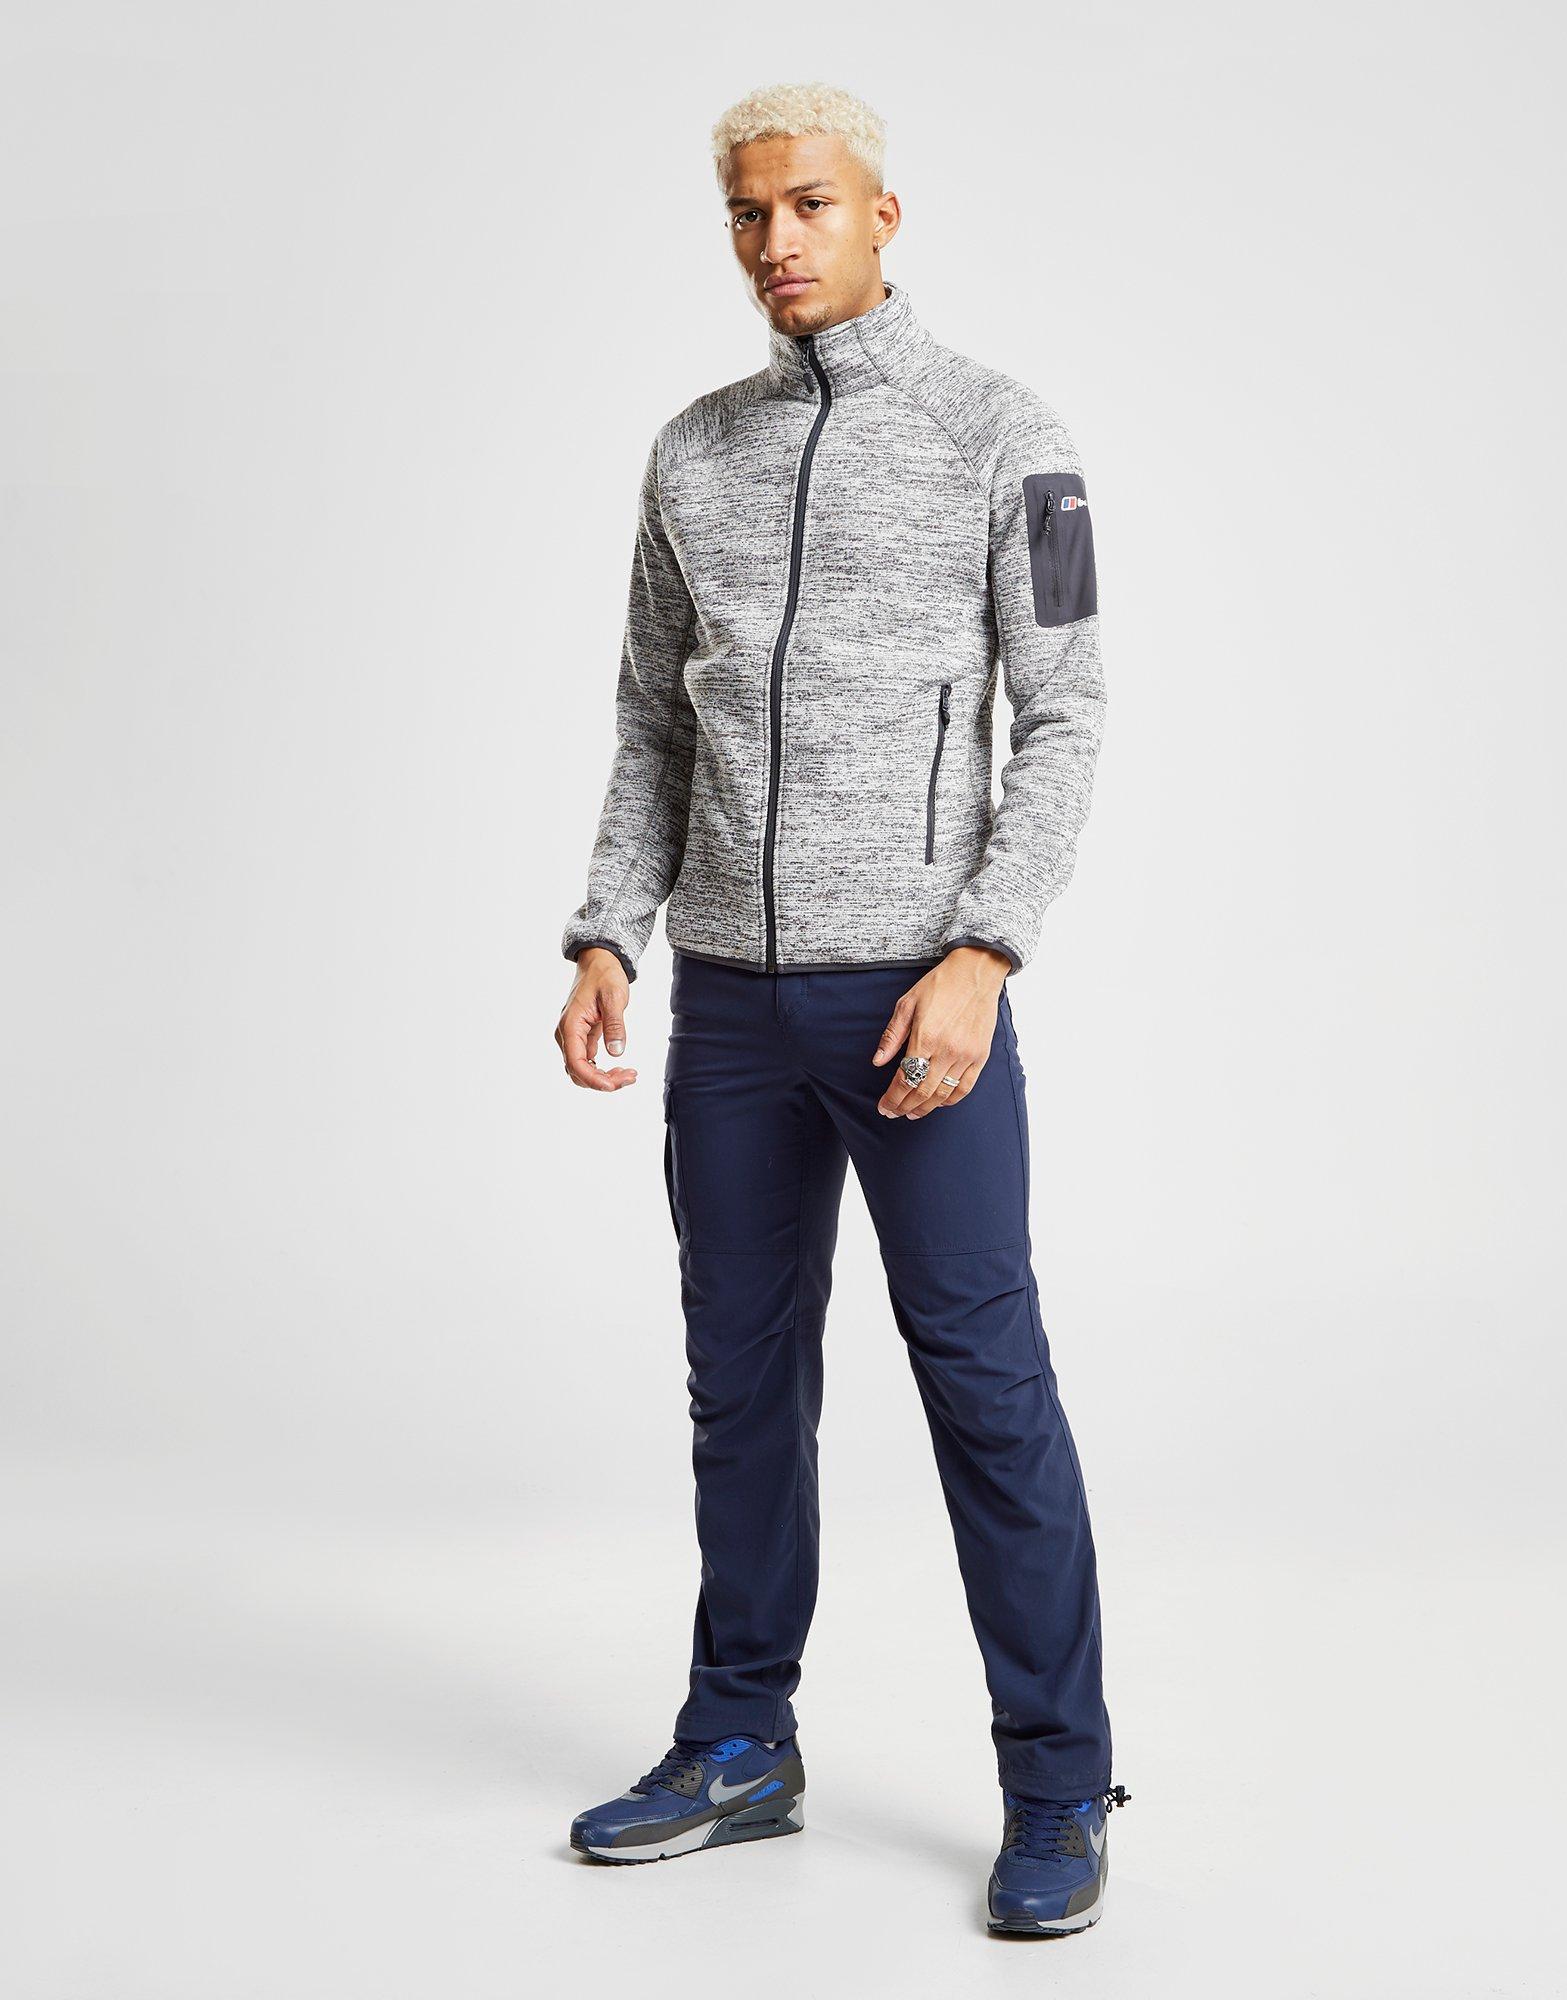 Berghaus Tulach 2.0 Fleece Jacket in Grey Marl (Grey) for Men - Lyst